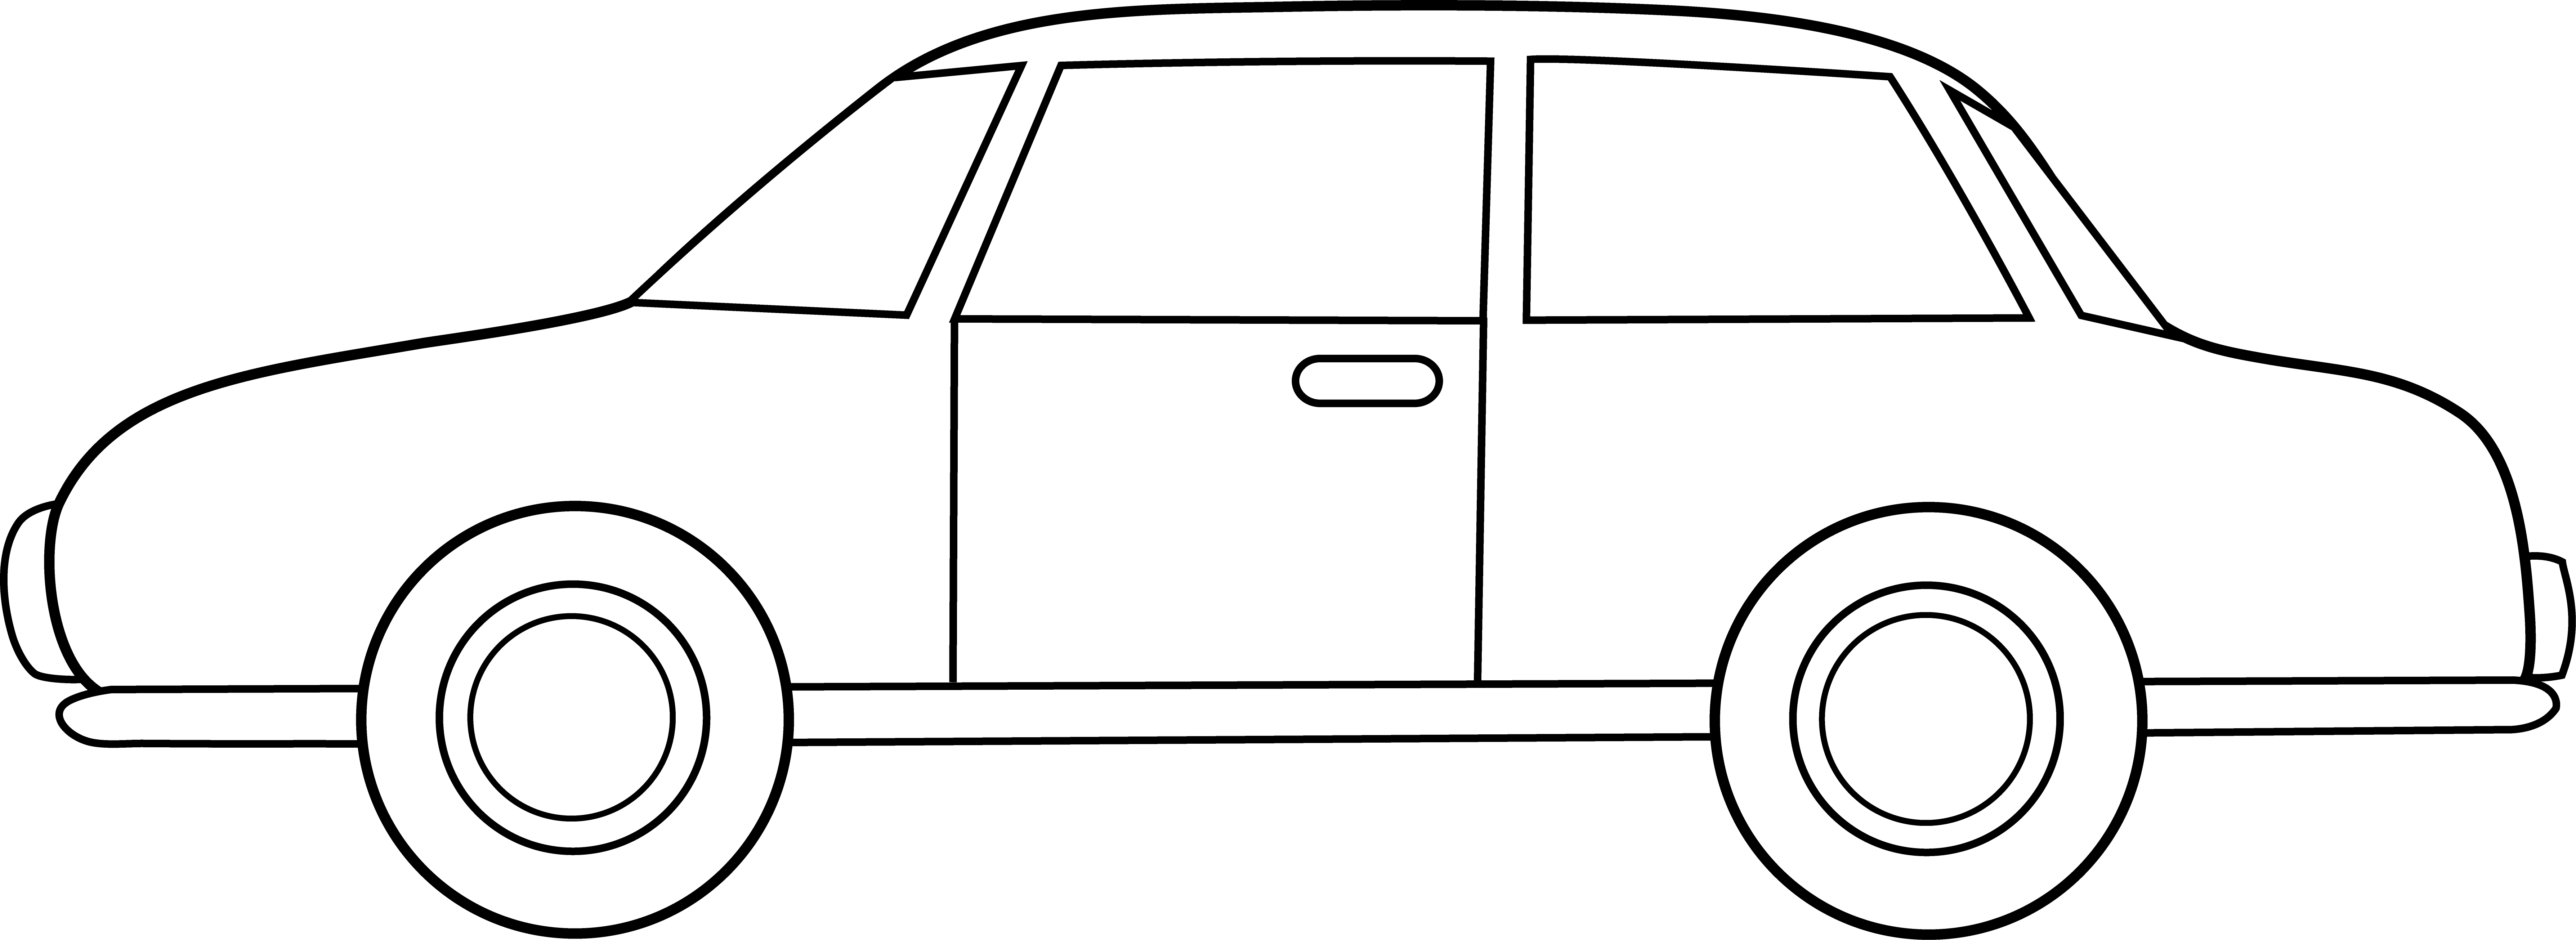 transportation clipart motor vehicle